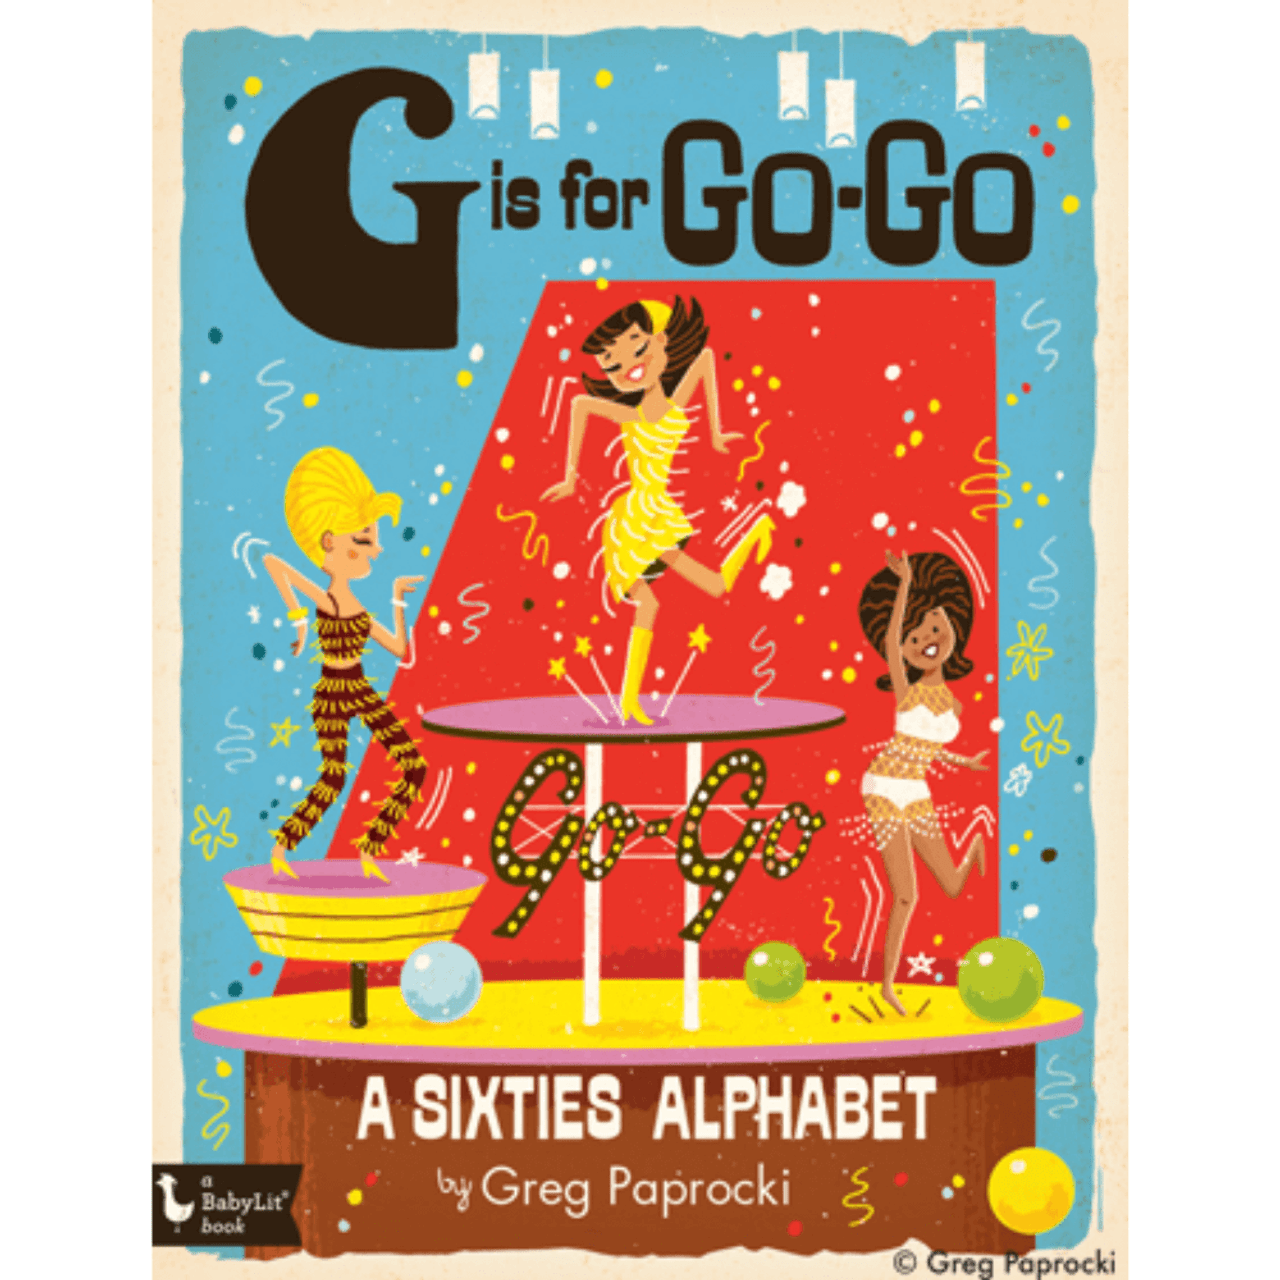 G is for Go Go A Sixties Alphabet Greg Paprocki